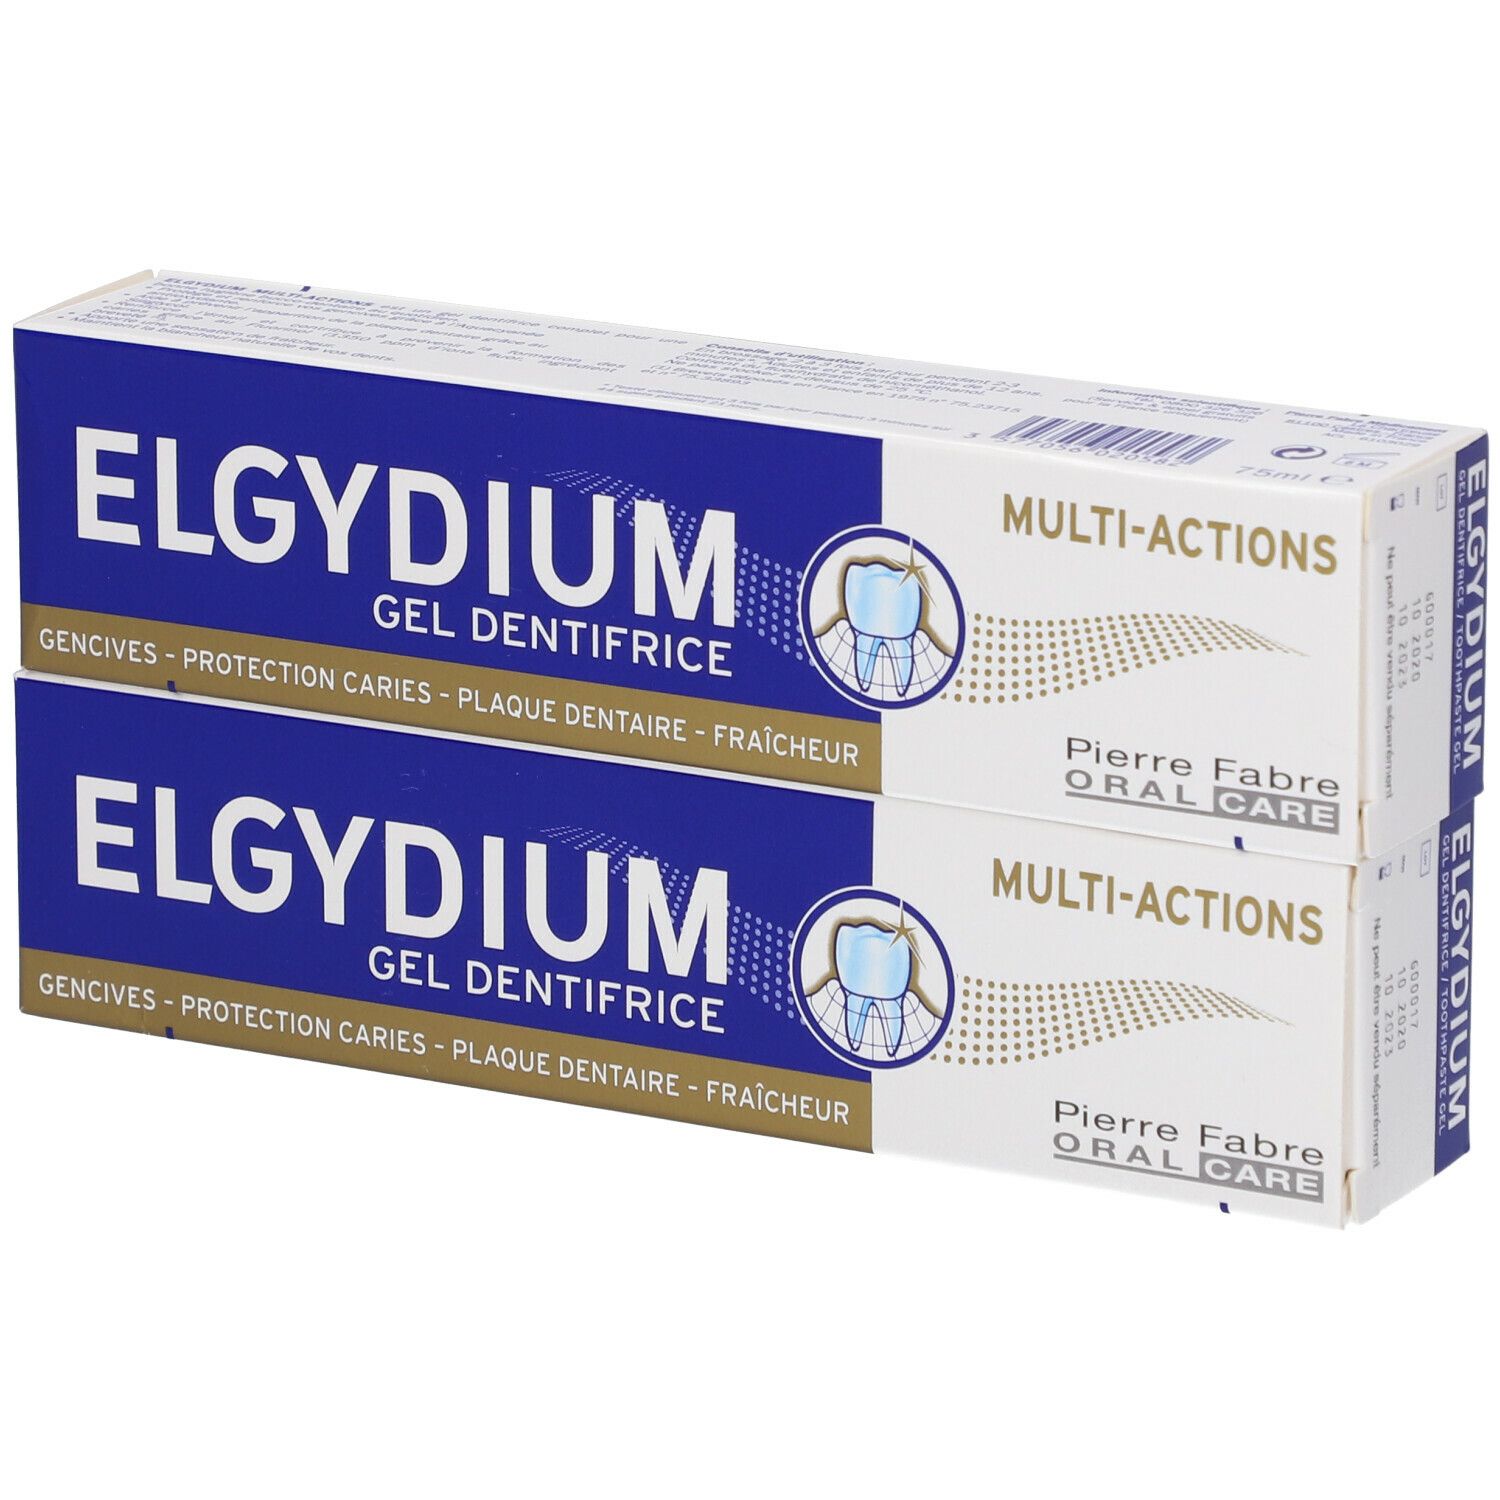 Elgydium Multi-actions Gel Dentifrice